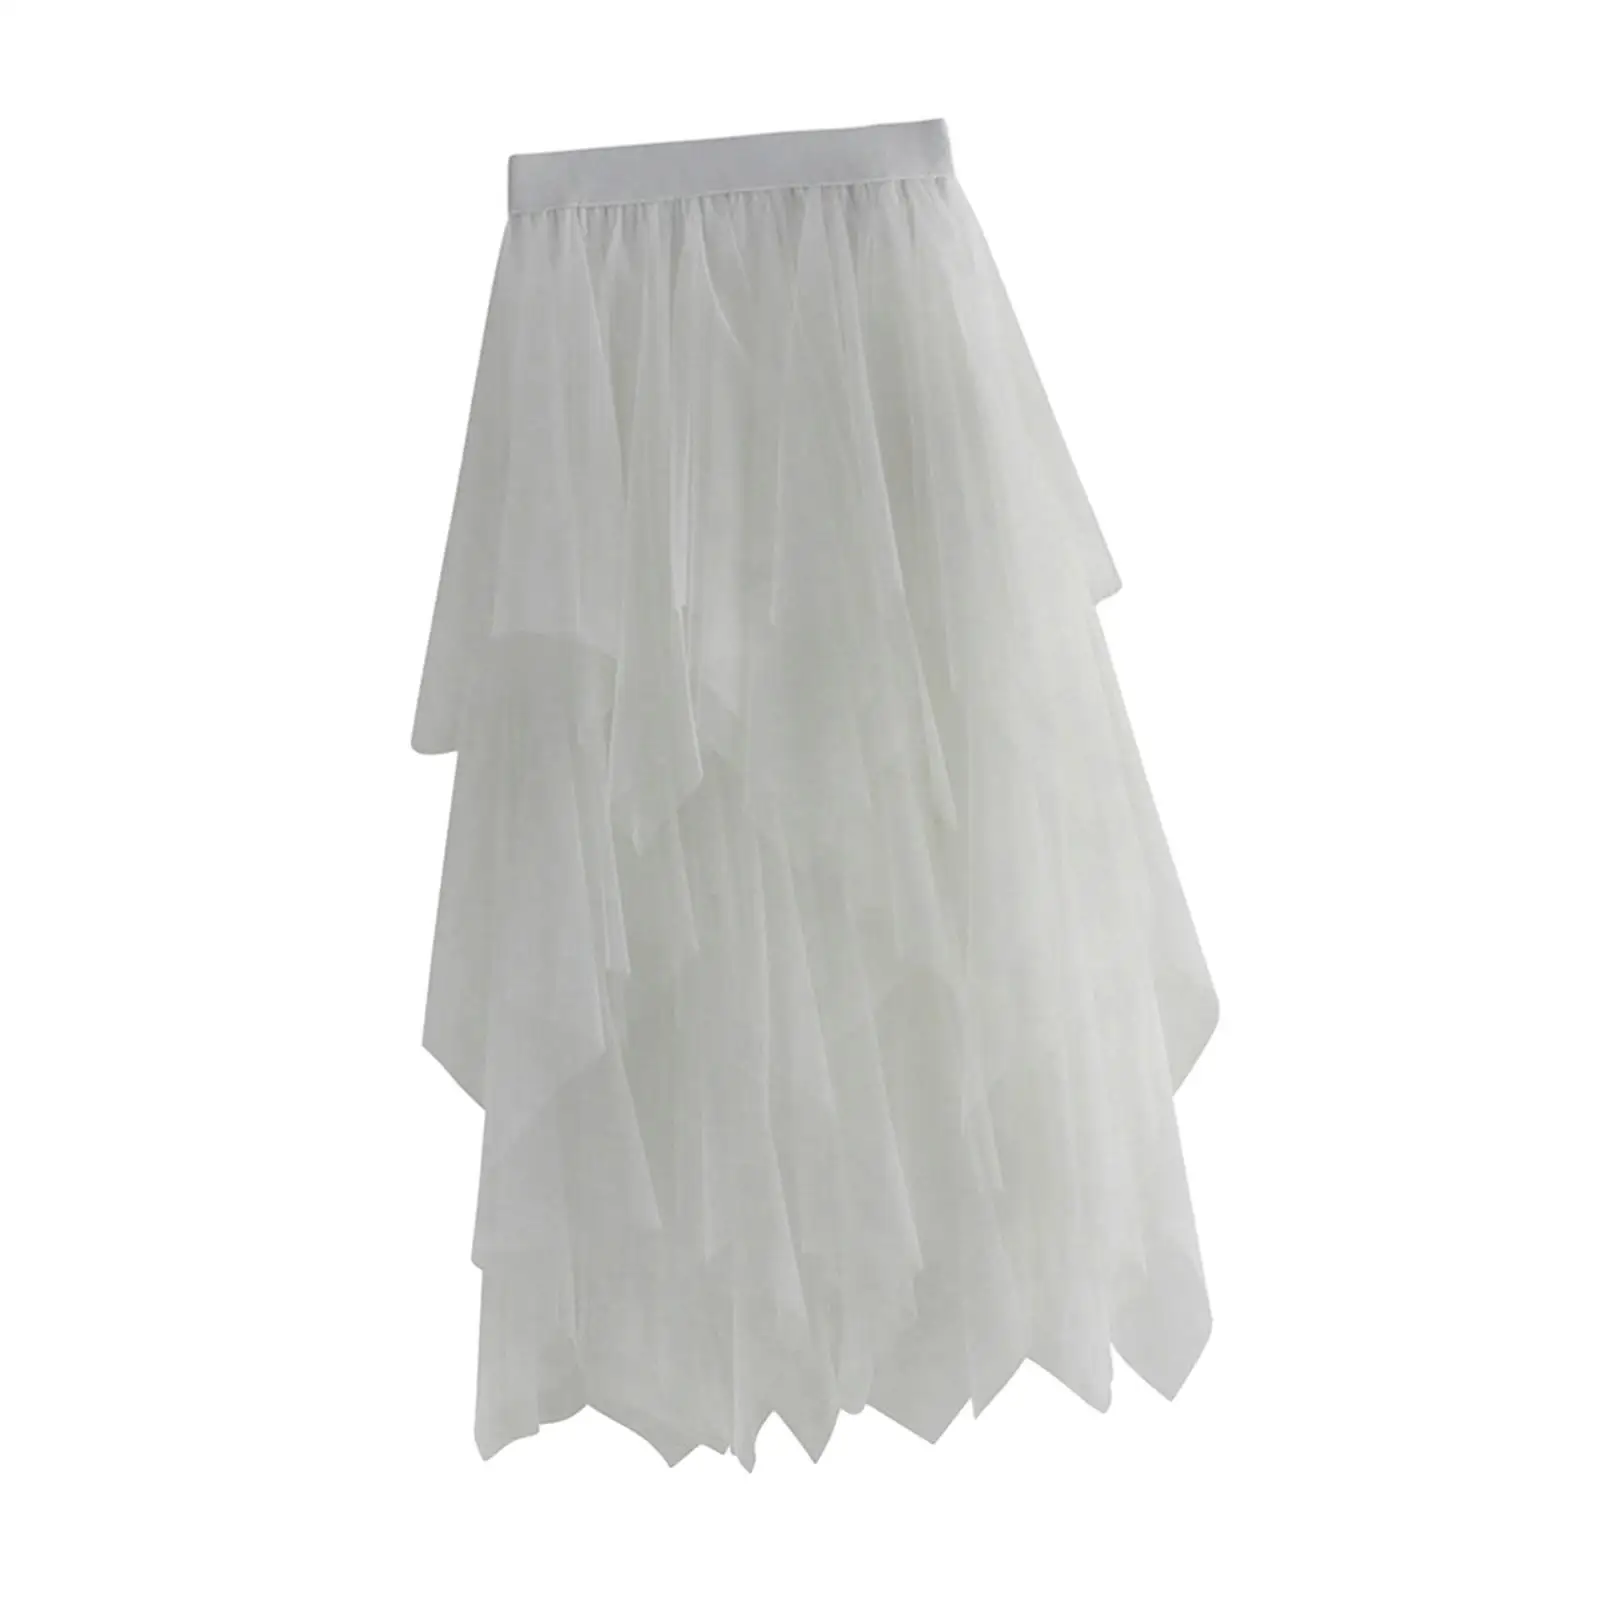 Women`s Tulle Skirt Tiered High Low Asymmetrical Midi Skirt Elastic Waist Half Skirt for Evening Party Wedding Formal Photo Prop